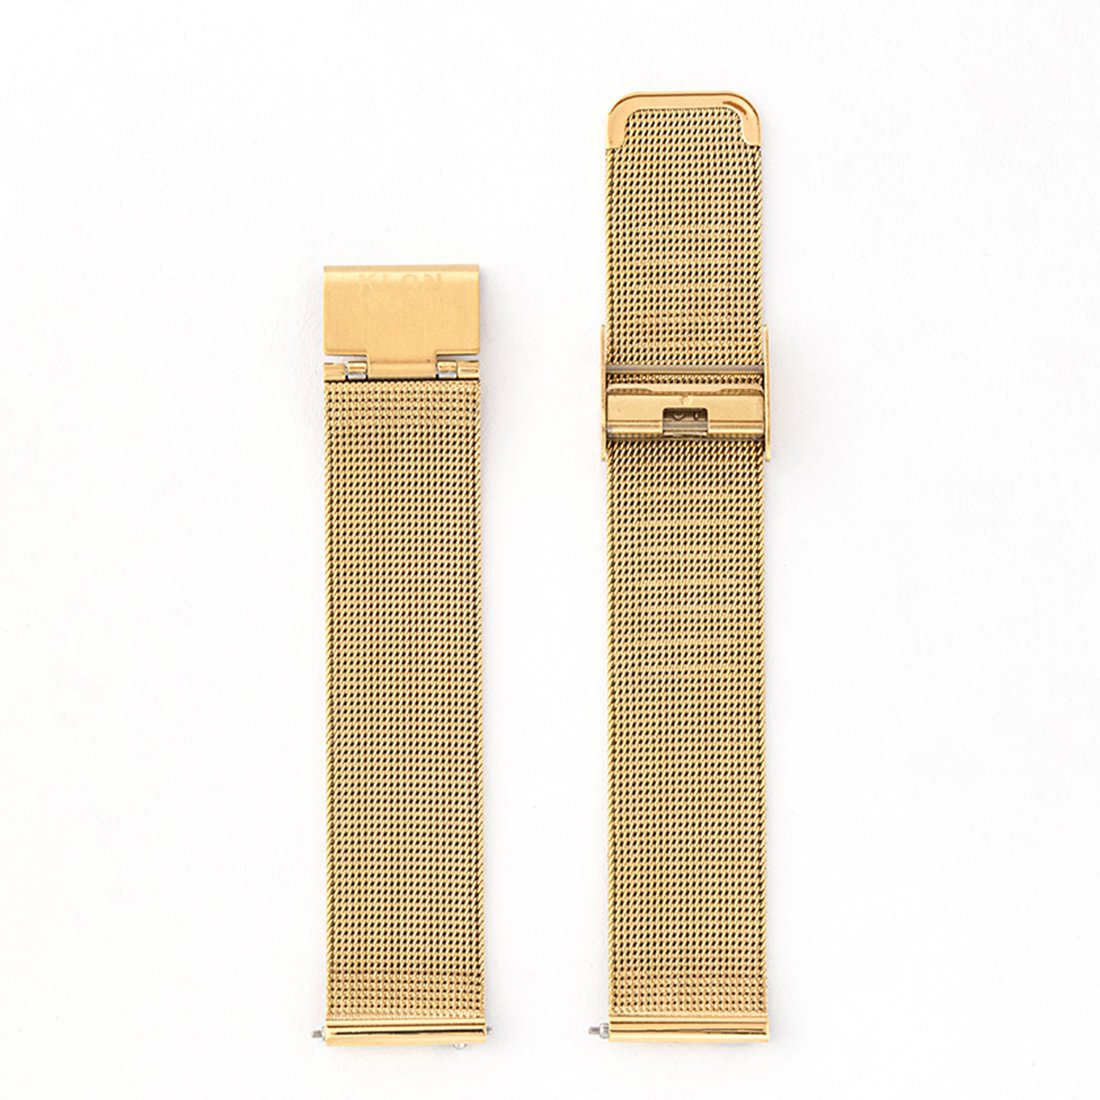 KLON WATCH REPLACEMENT STRAP -GOLD MESH- 18mm